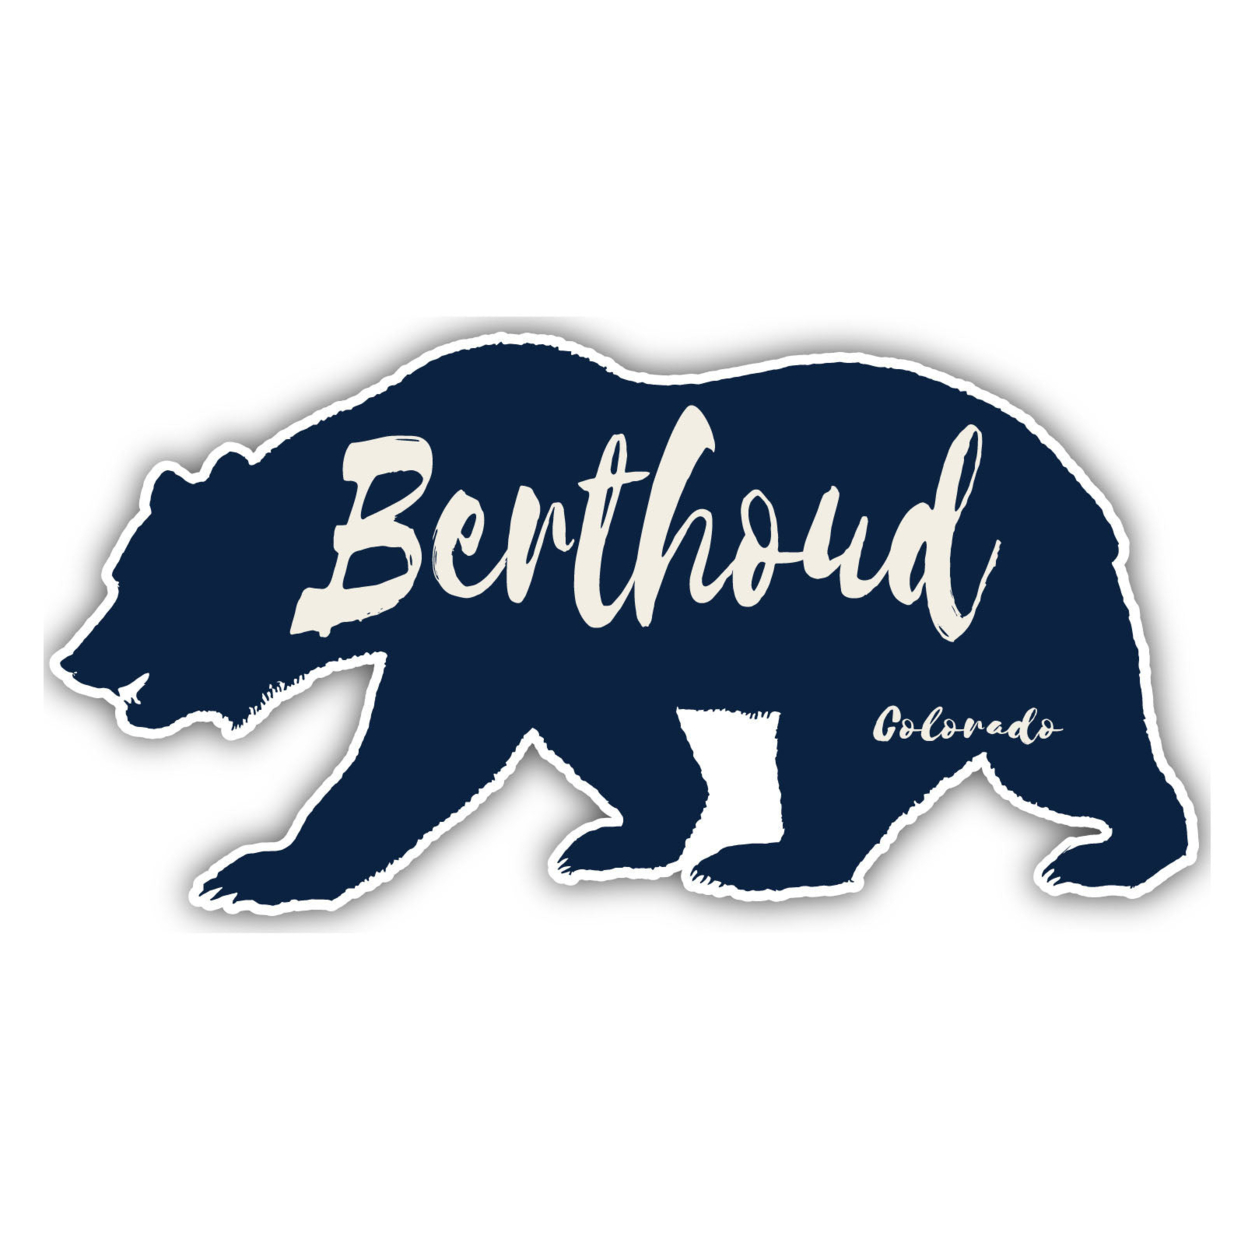 Berthoud Colorado Souvenir Decorative Stickers (Choose Theme And Size) - 4-Pack, 2-Inch, Bear